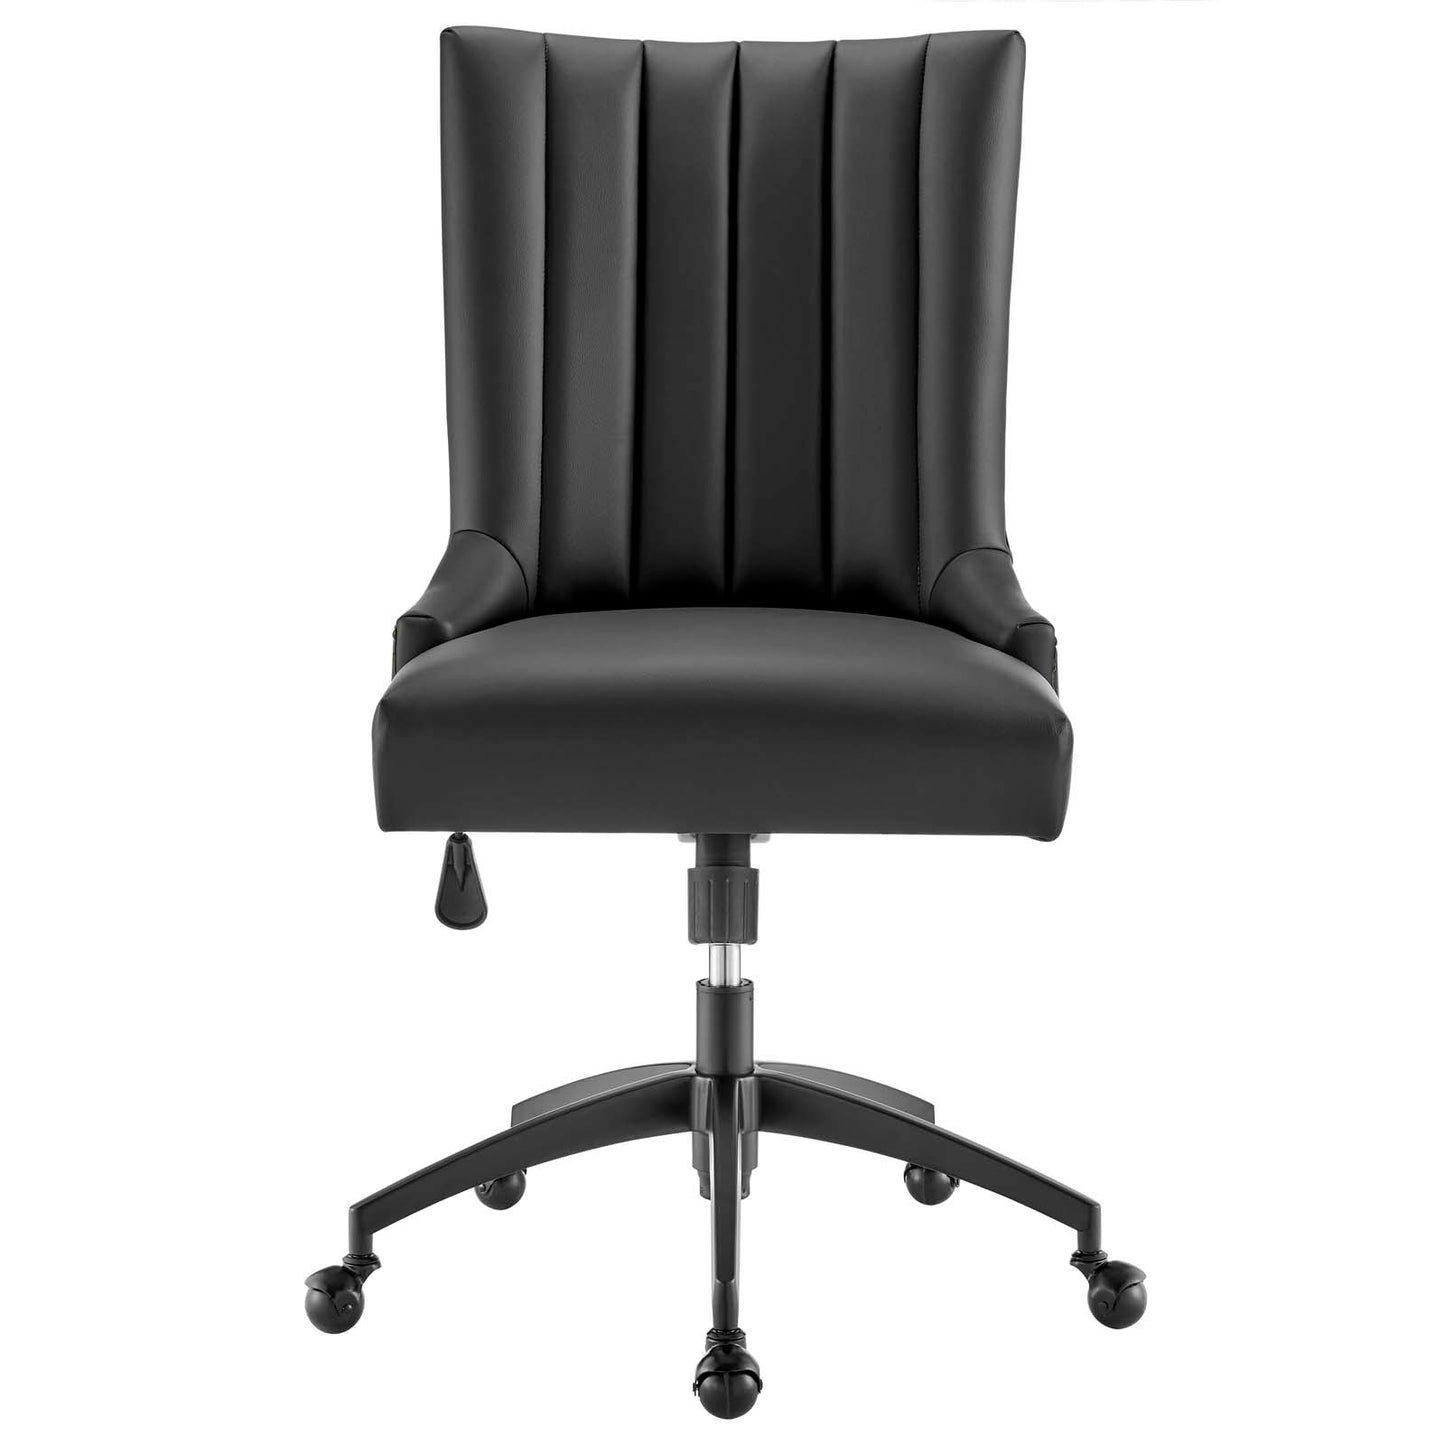 Empower Channel Tufted Vegan Leather Office Chair Black Black EEI-4577-BLK-BLK